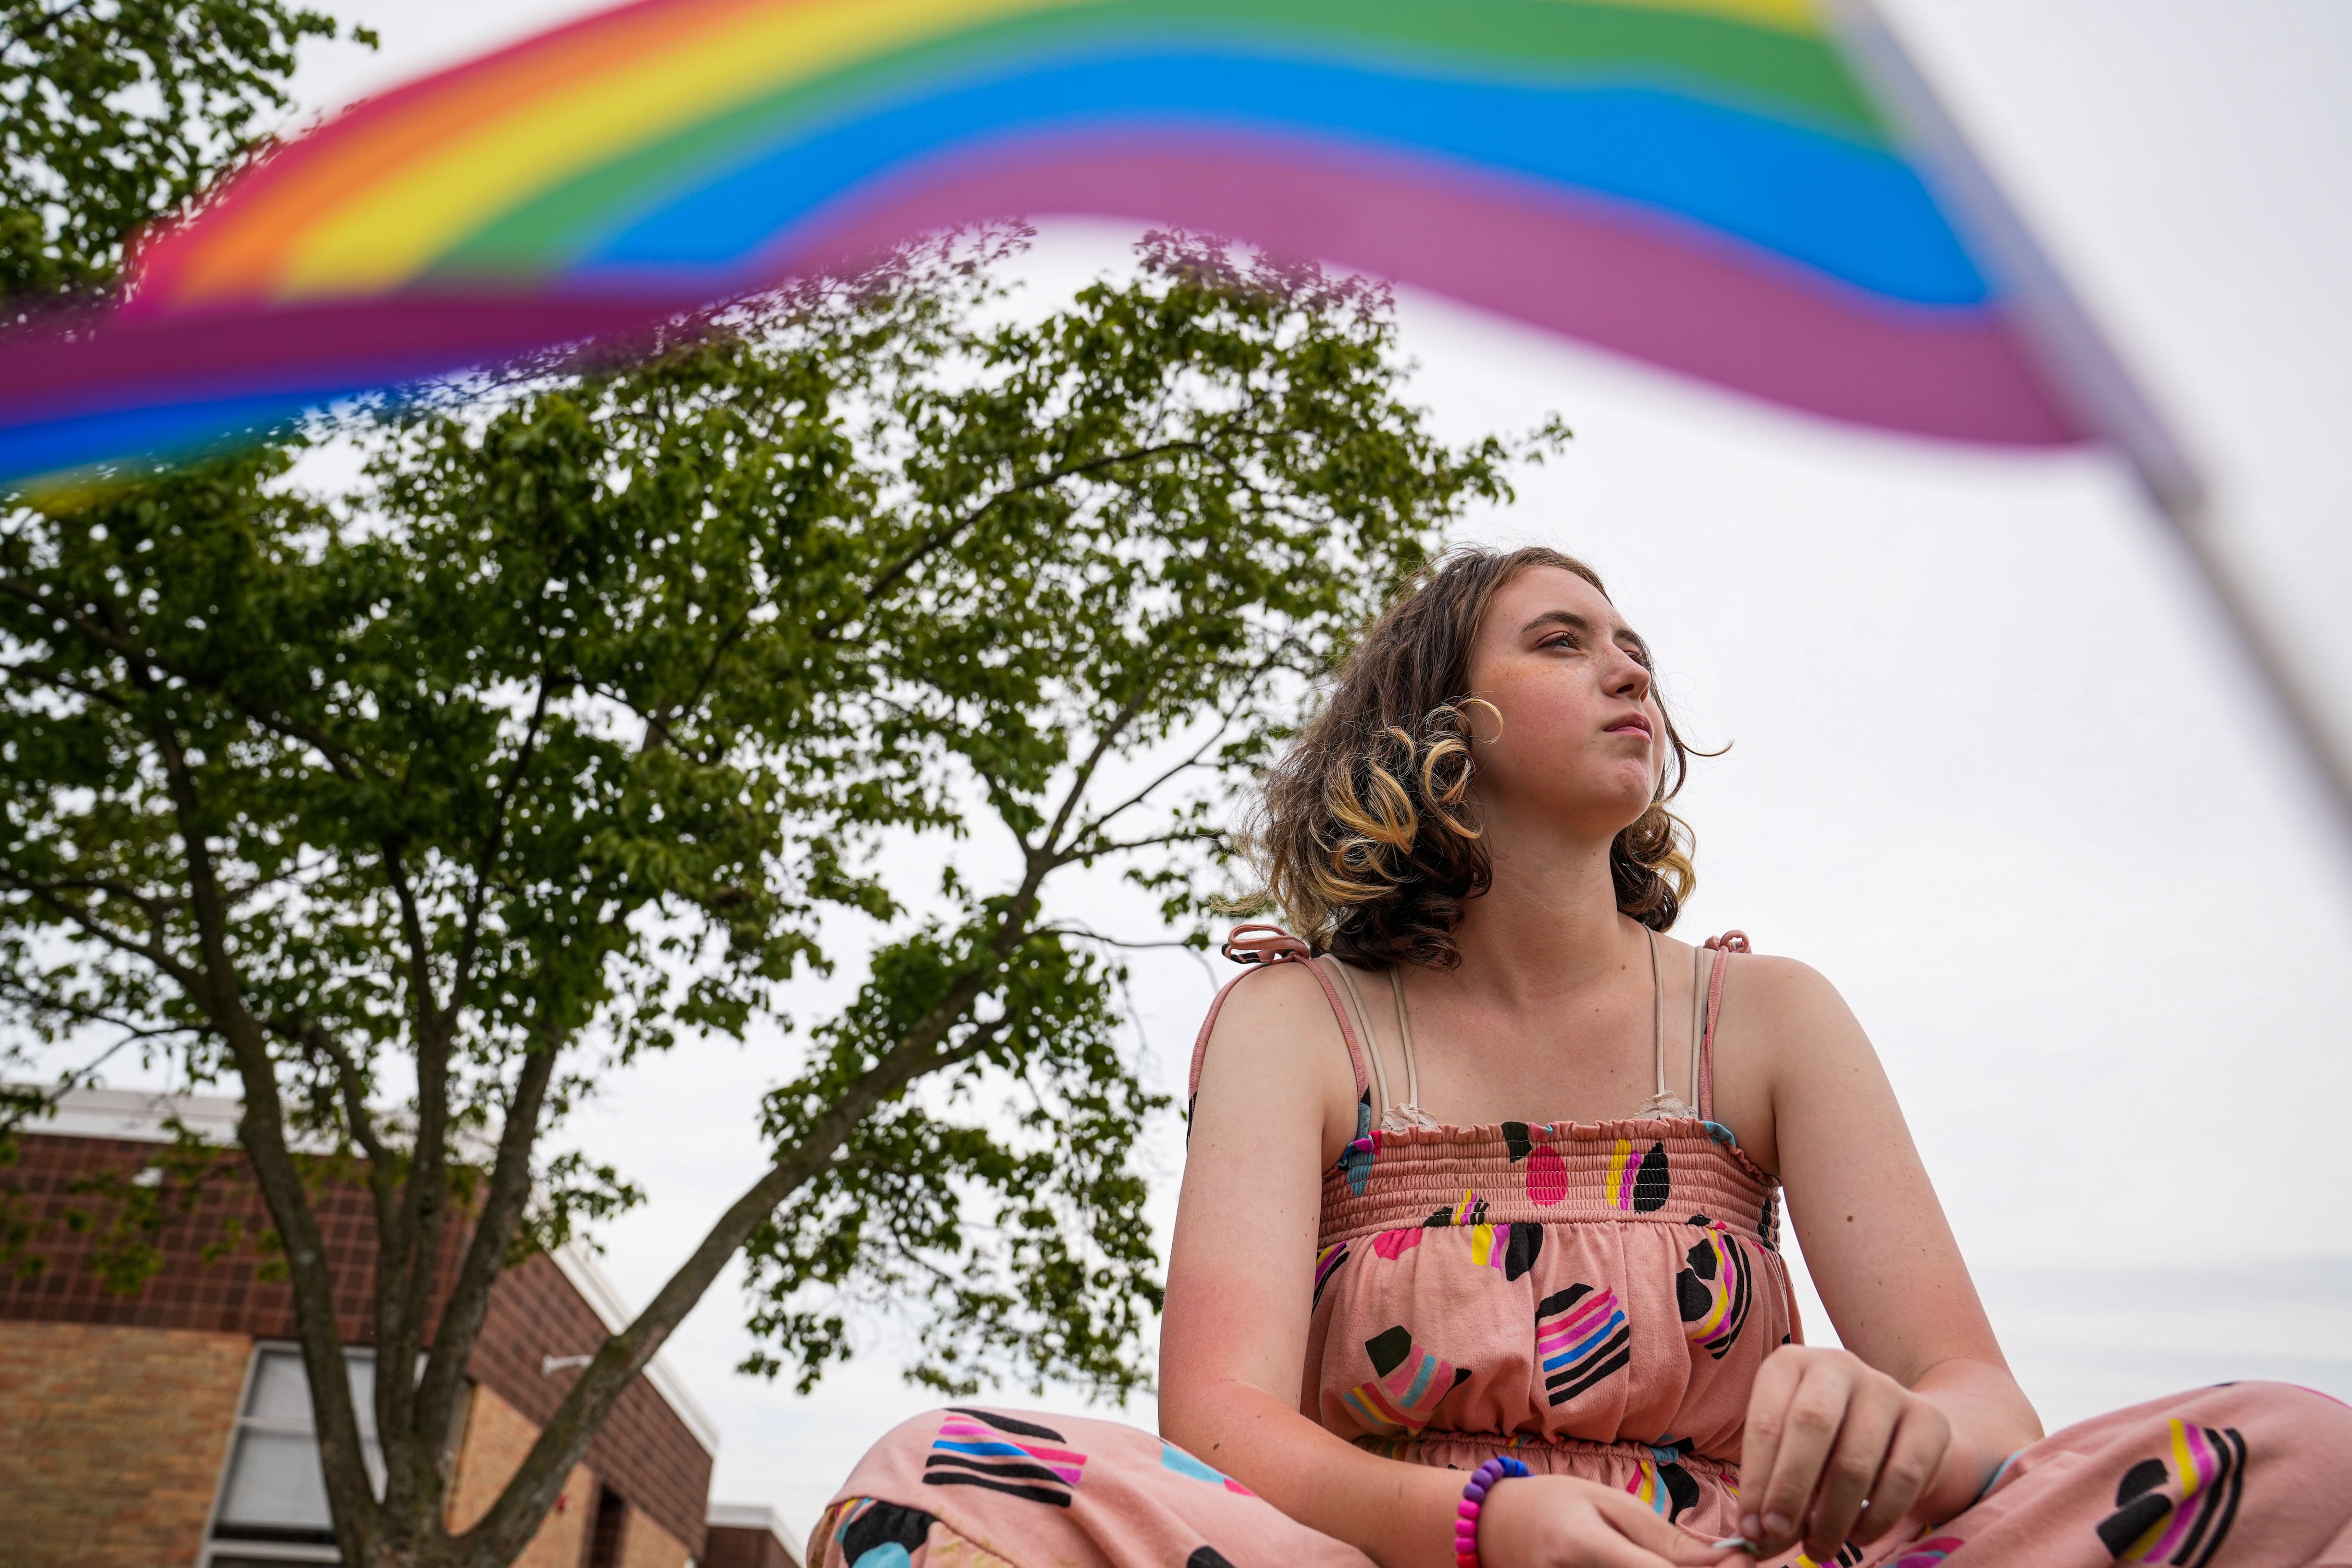 SF Giants celebrate Pride incorporating the rainbow into uniform